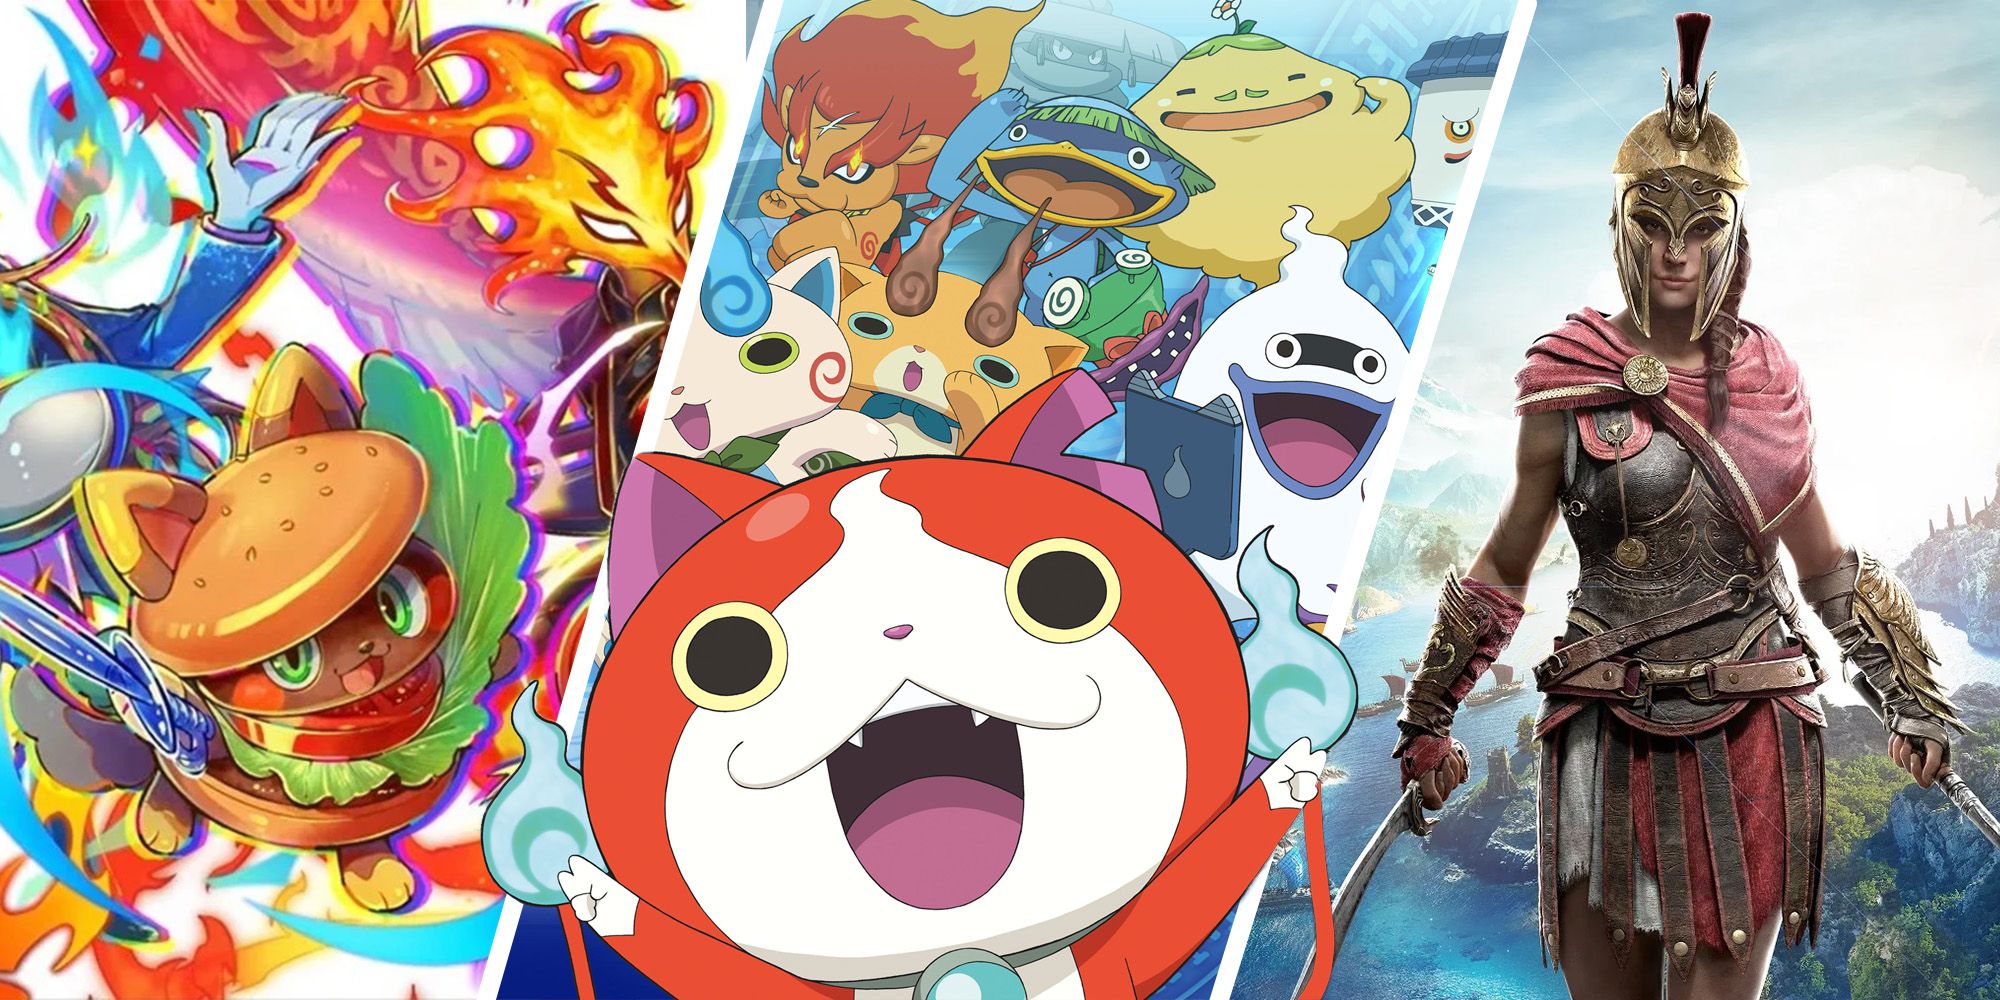 Nintendo Switch Online Japan-Exclusive Games